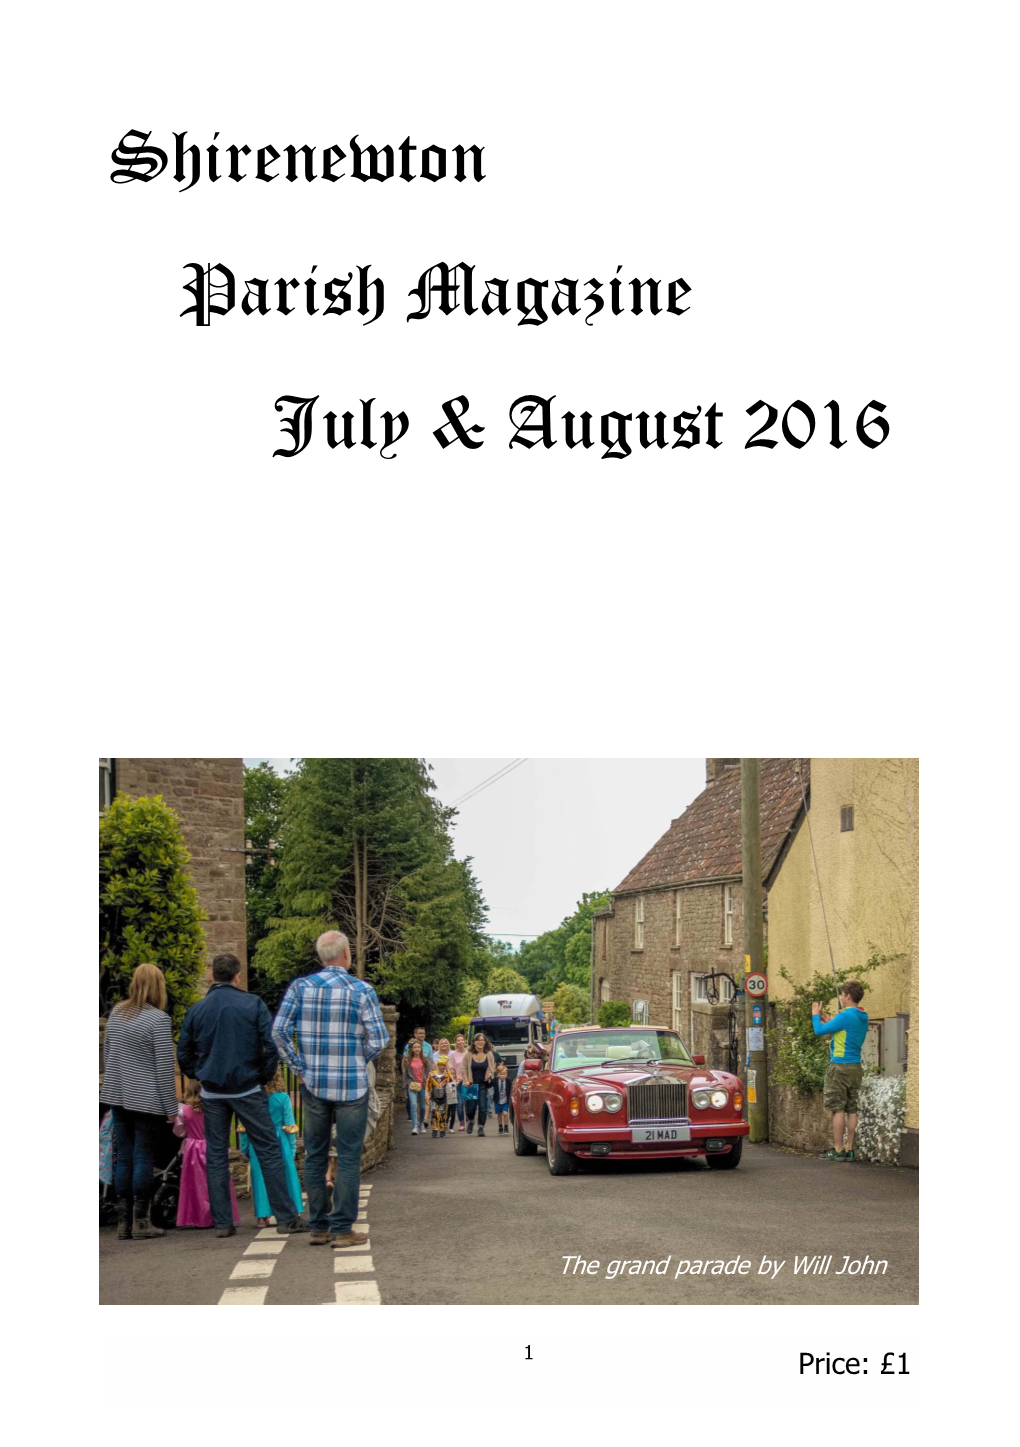 Shirenewton Parish Magazine July & August 2016